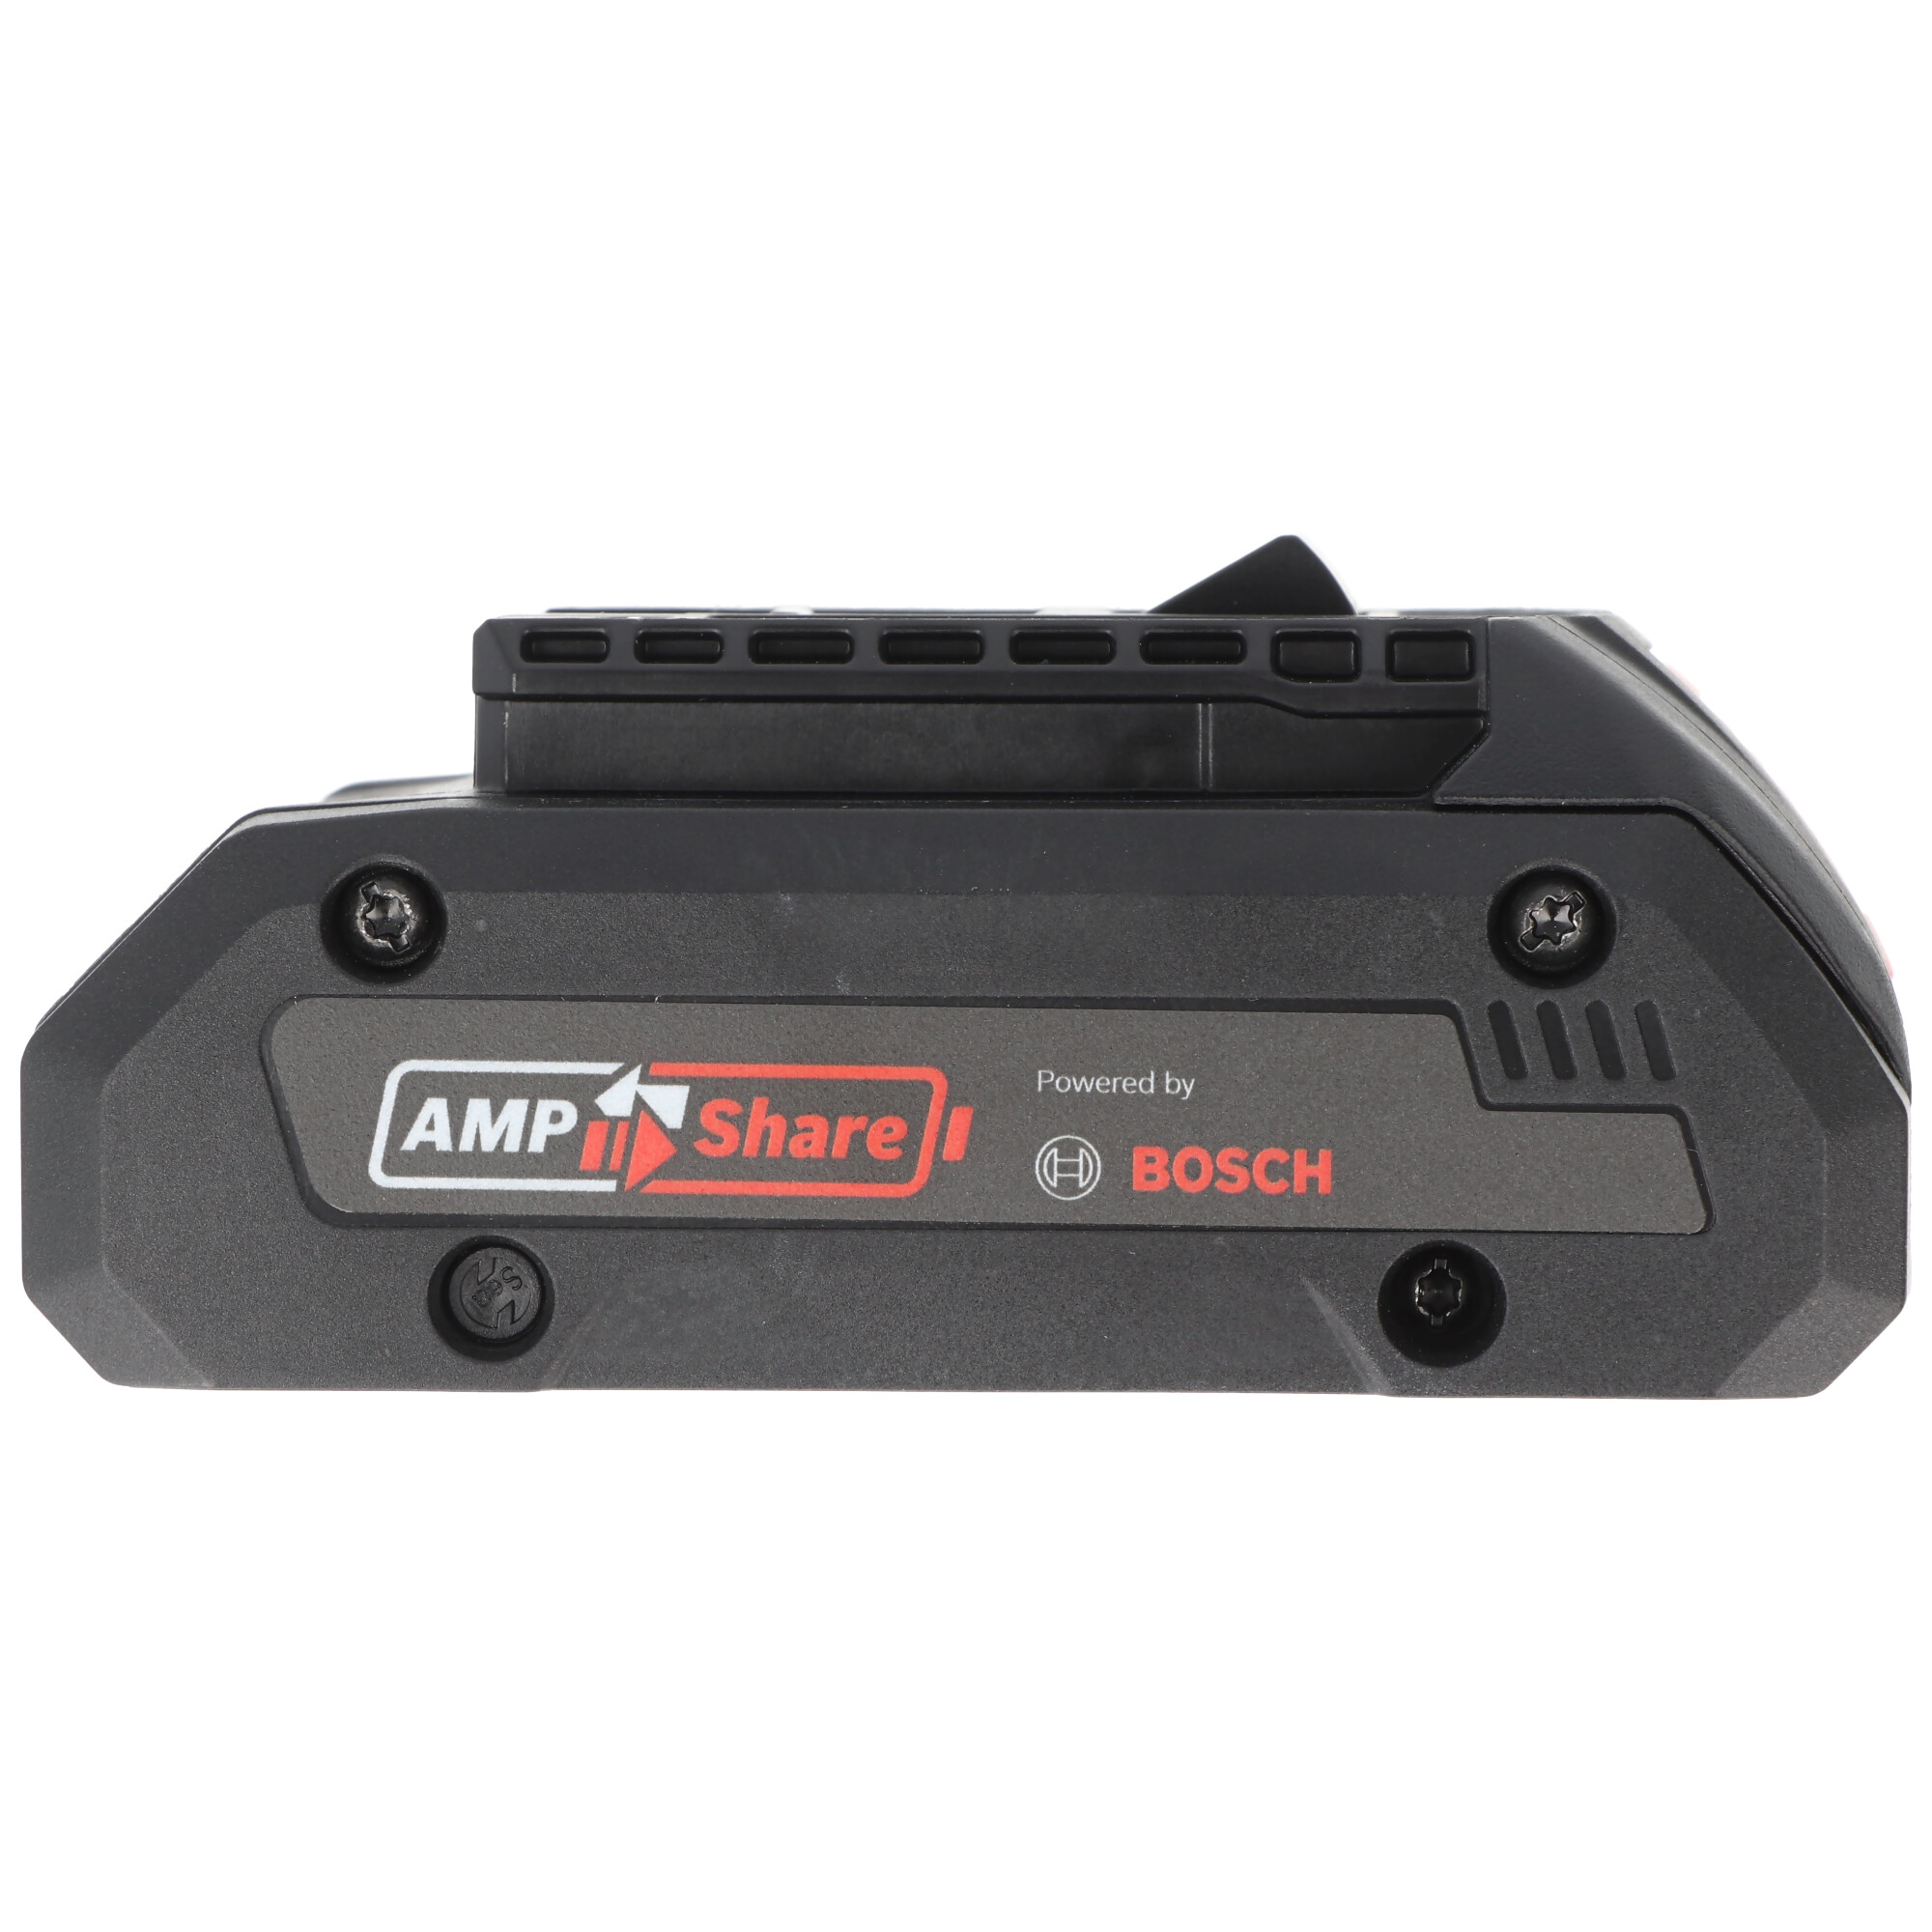 Bosch Akku ProCore 18V, 4.0Ah 1 600 A01 6GB, AMPShare kompatibel